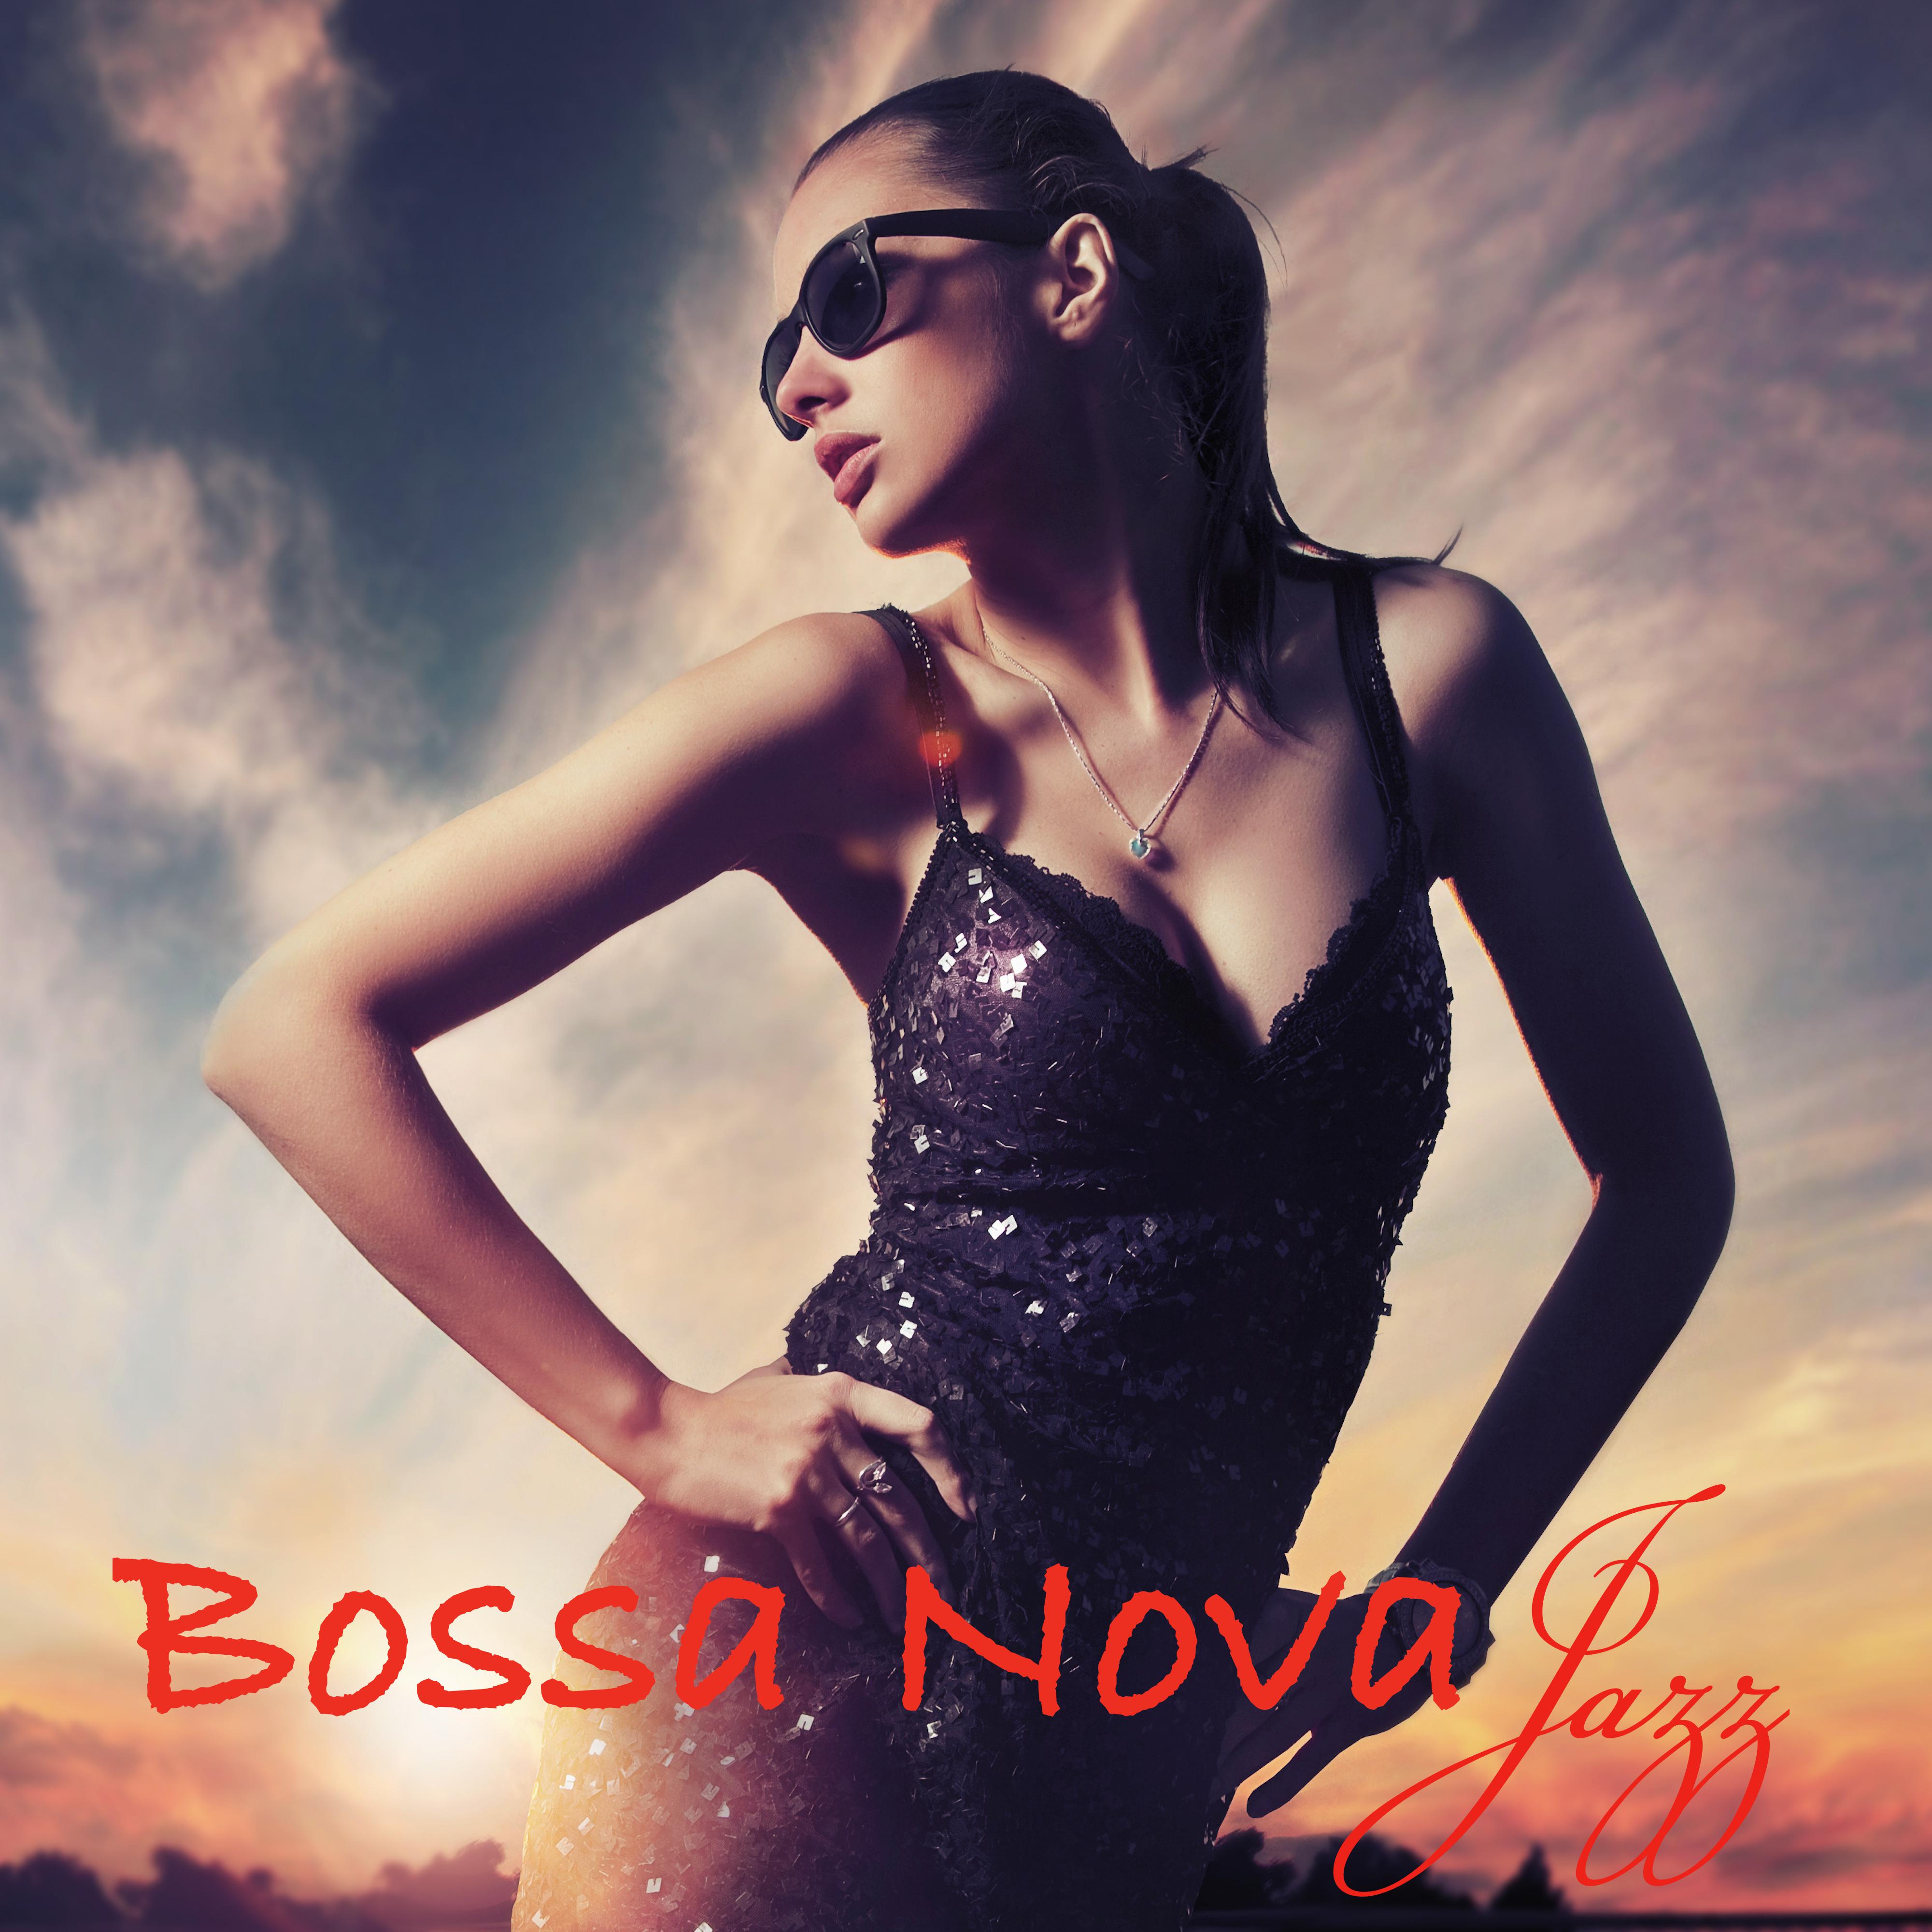 Bossa Nova Jazz - Brazilian Bossa Nova Music & Piano Bar Restaurant and Lounge Music Club